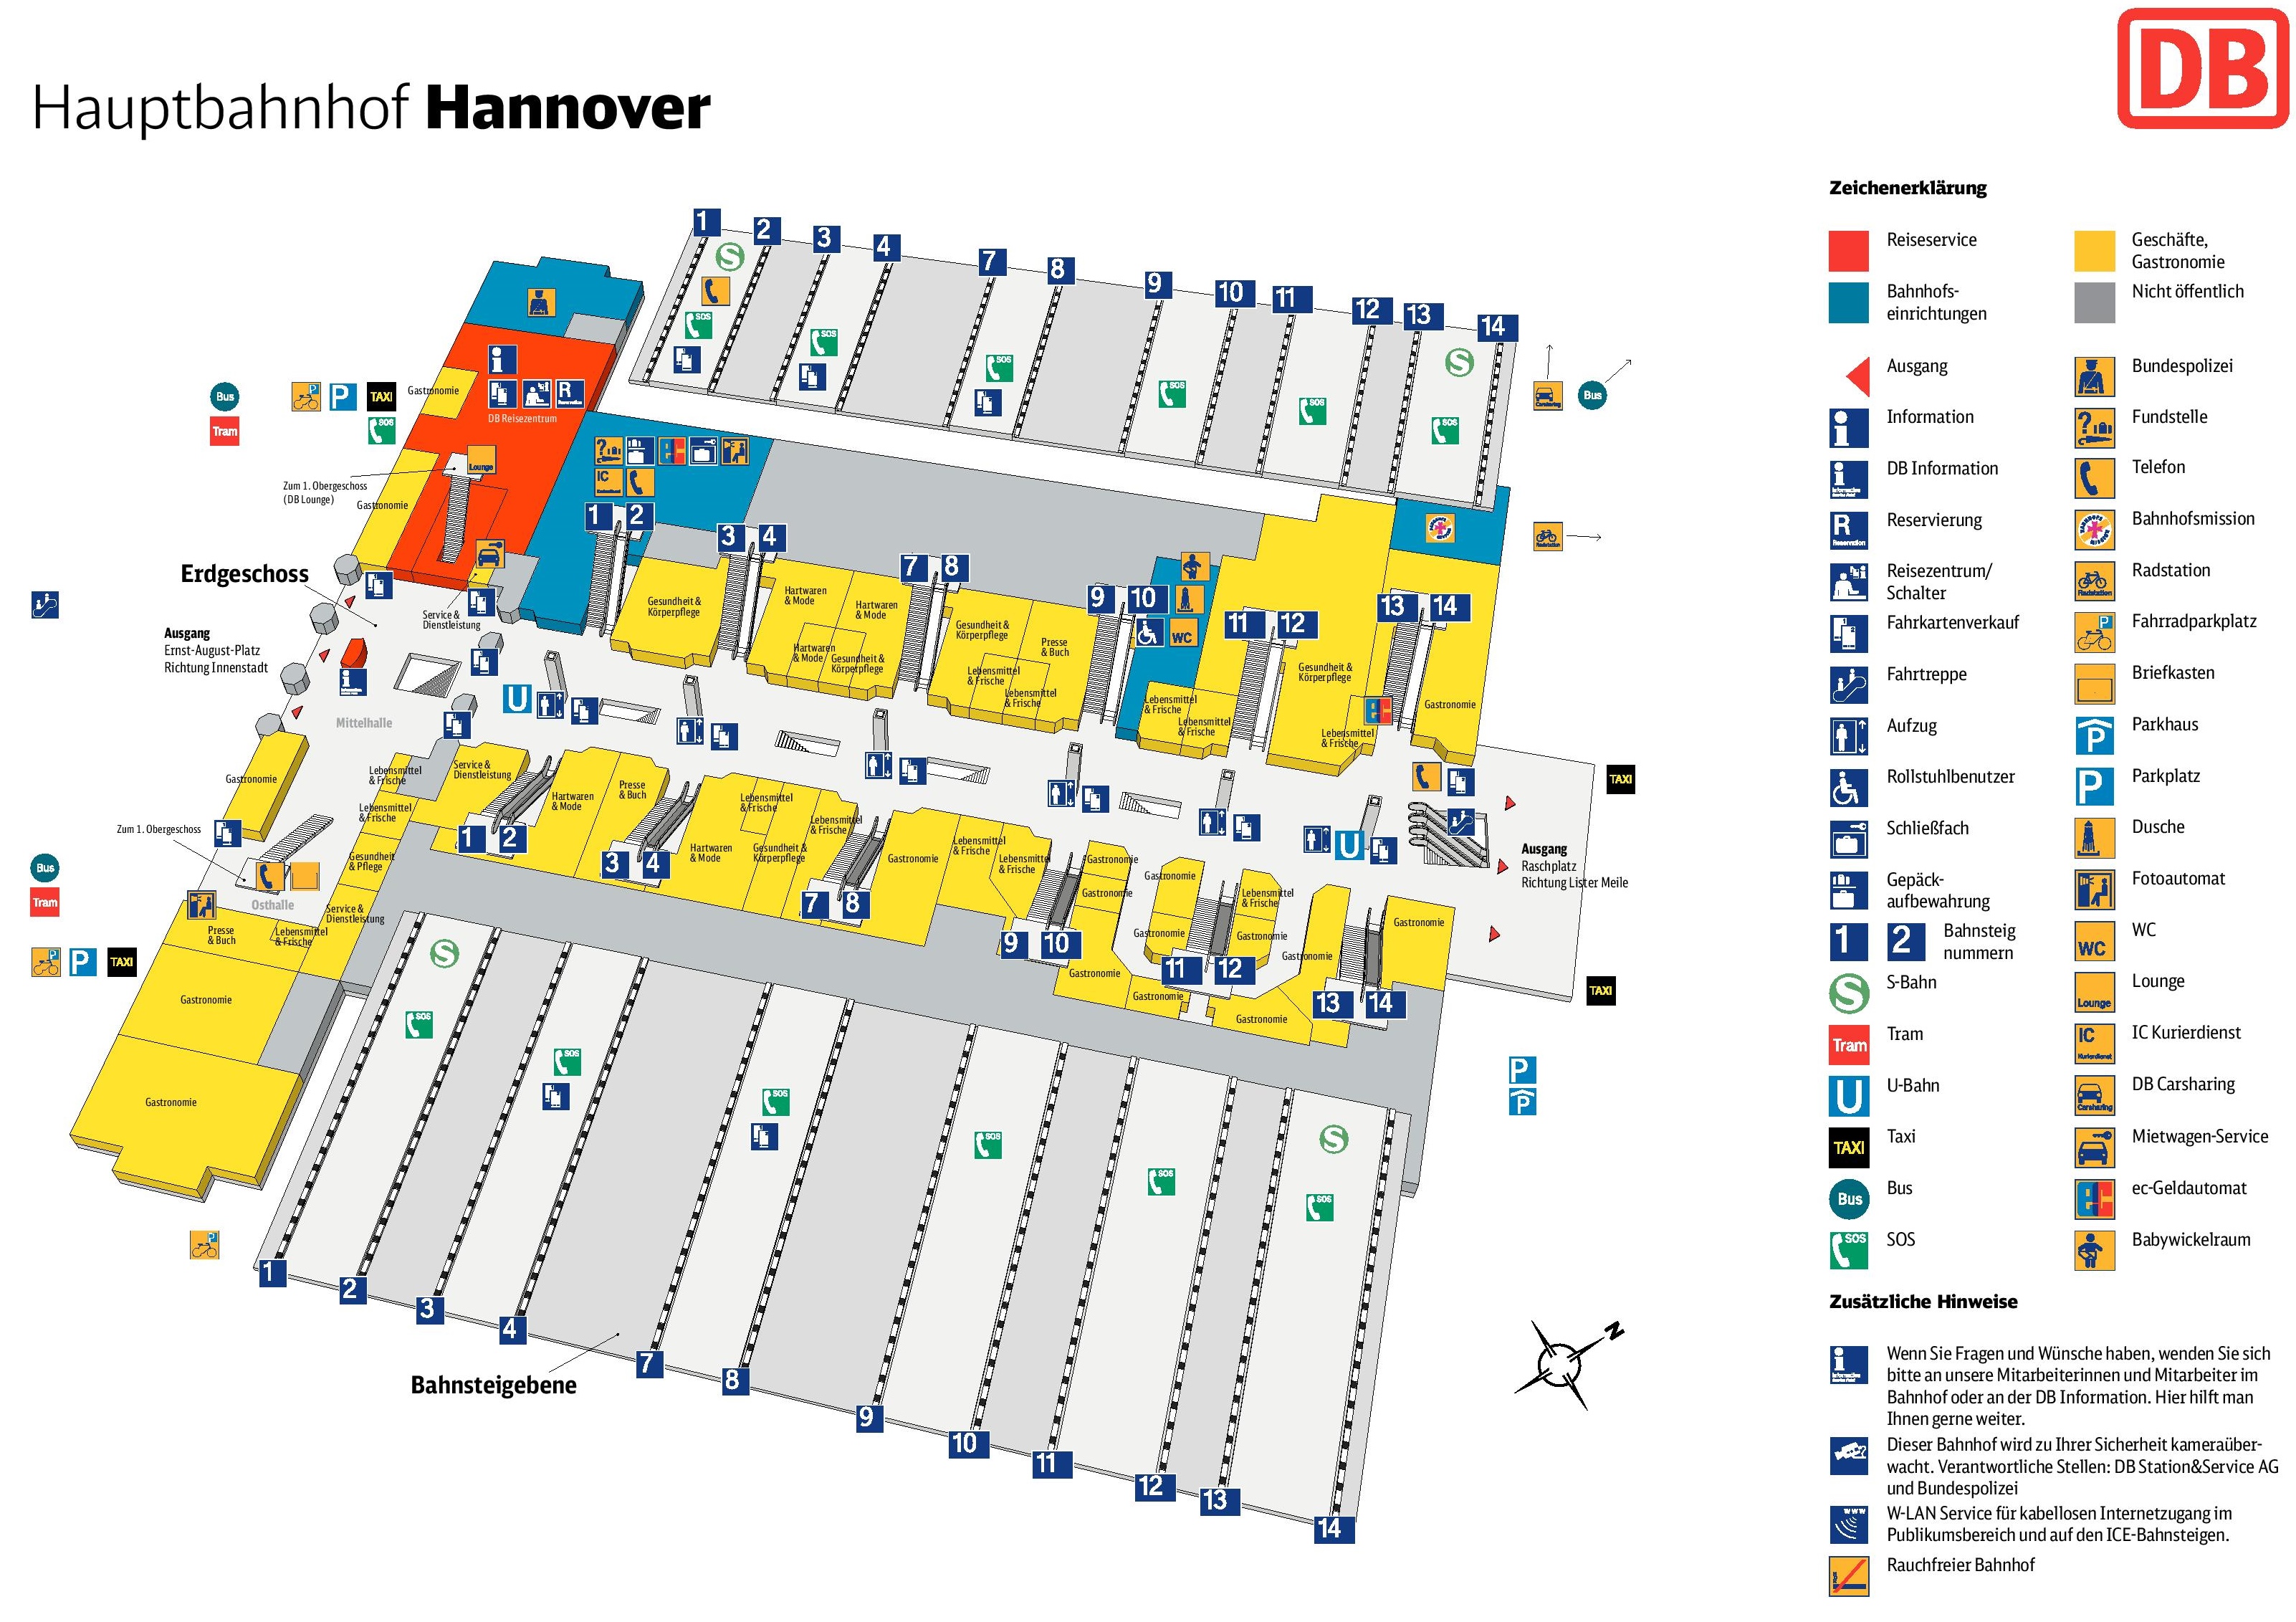 Hannover hauptbahnhof map (central train station)